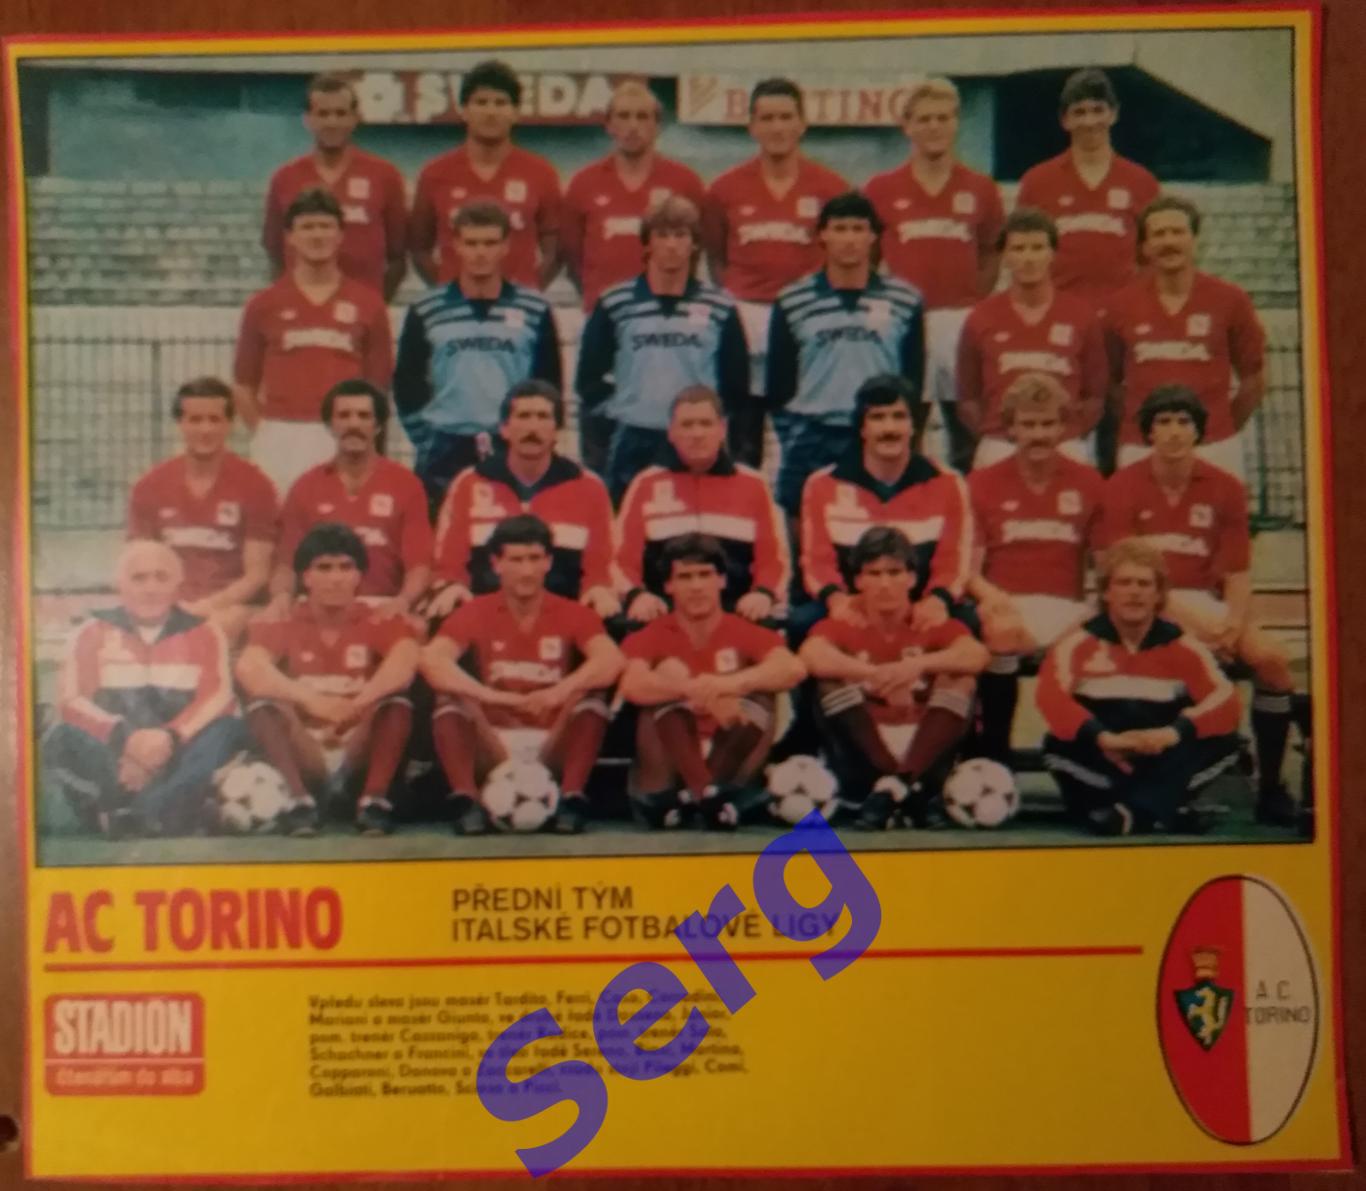 Постер Торино Турин, Италия из журнала Стадион (Stadion)